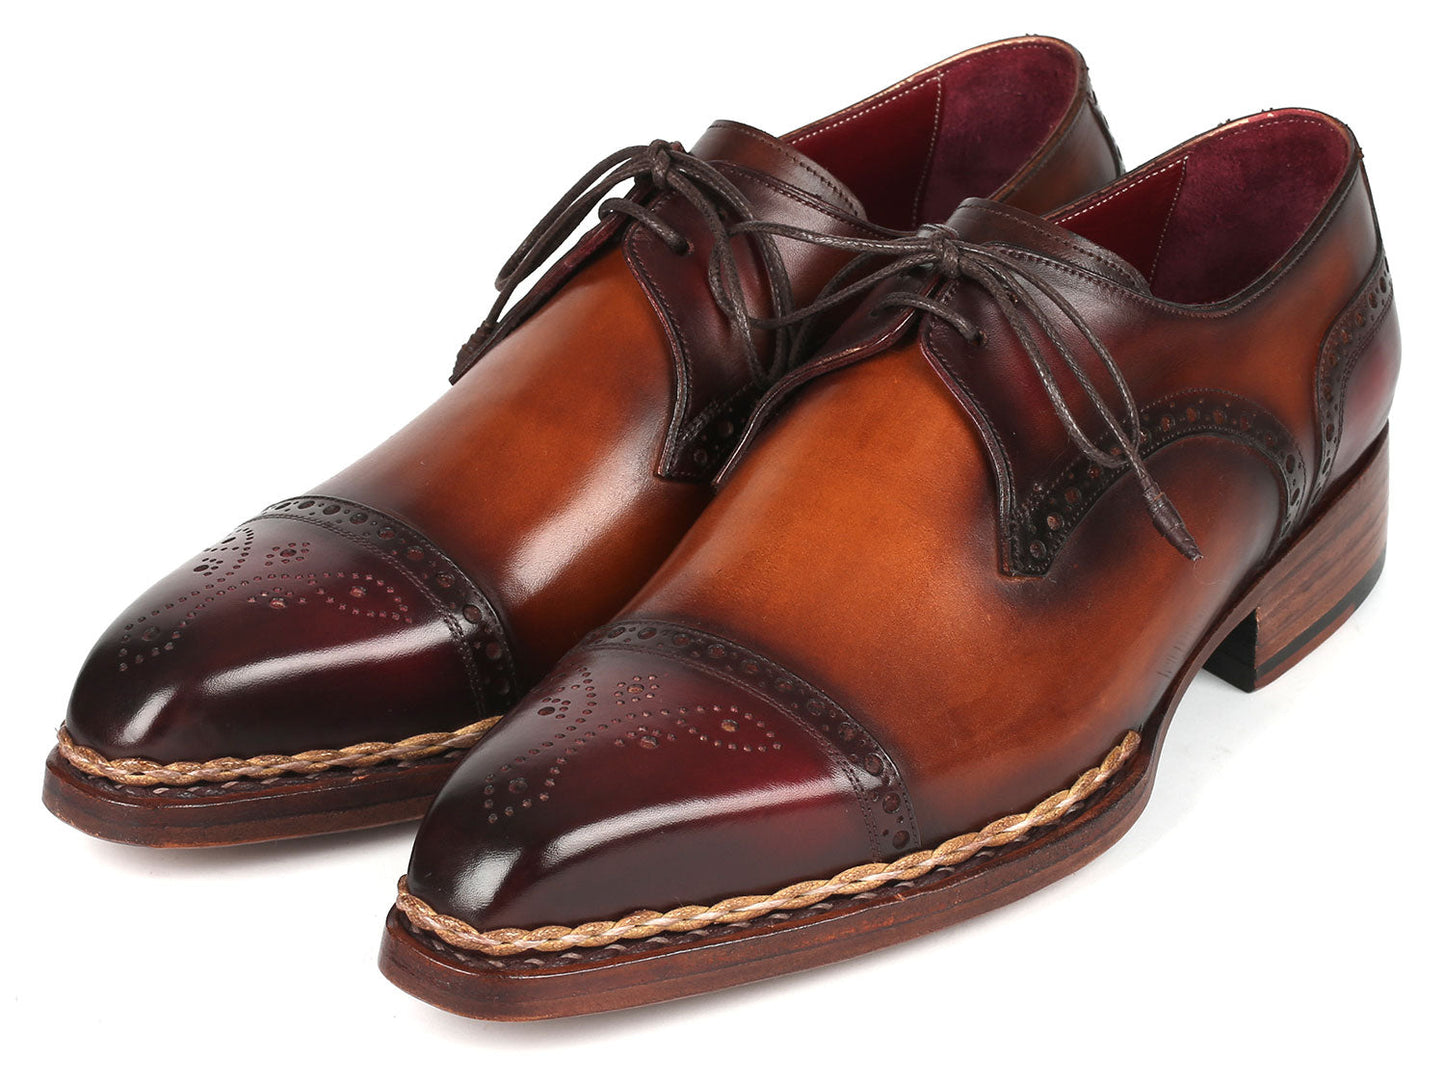 Paul Parkman Norwegian Welted Cap Toe Derby Shoes Bordeaux & Brown (ID#8508-BRW)